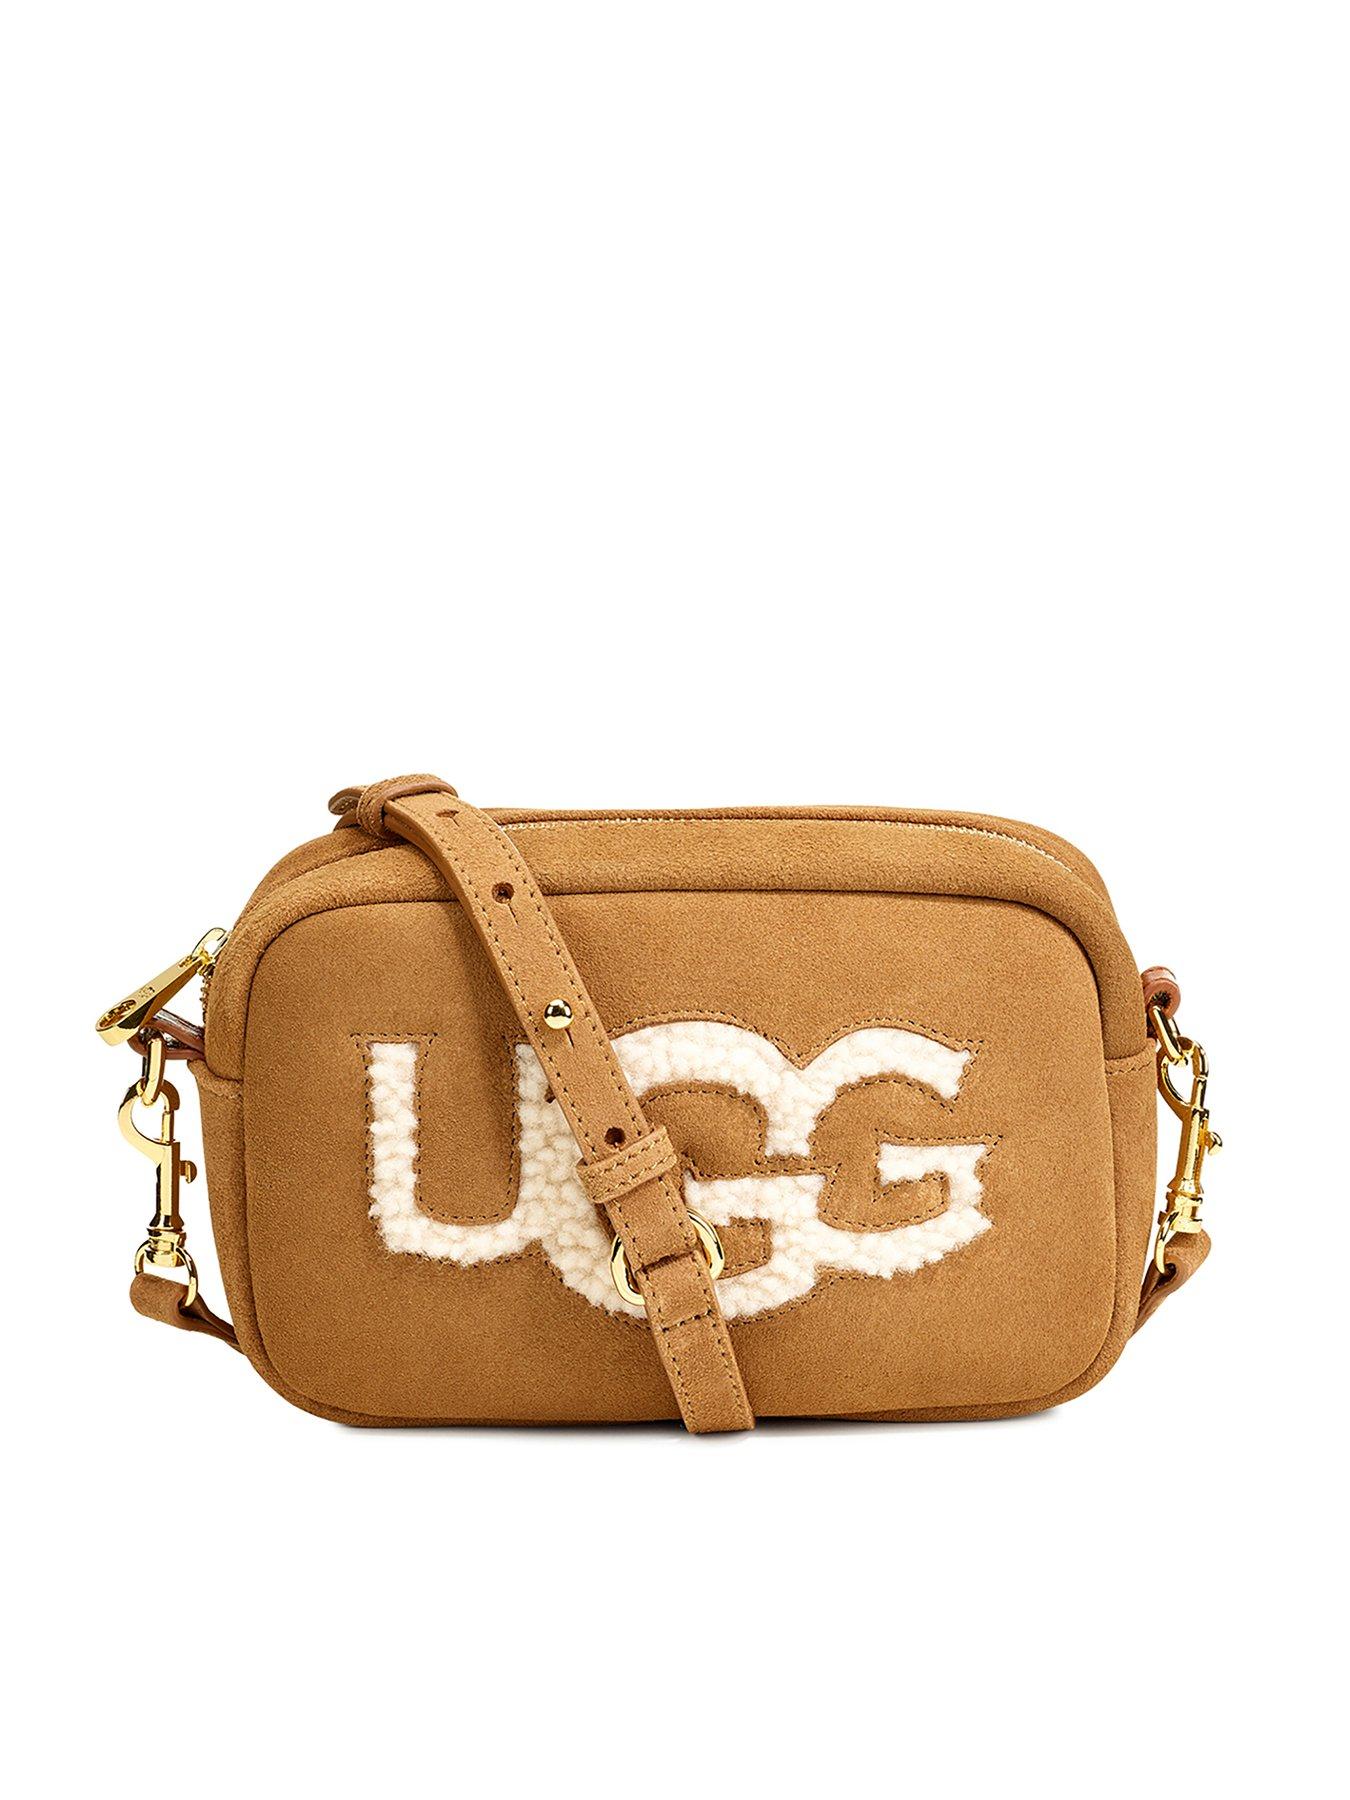 ugg purse clearance